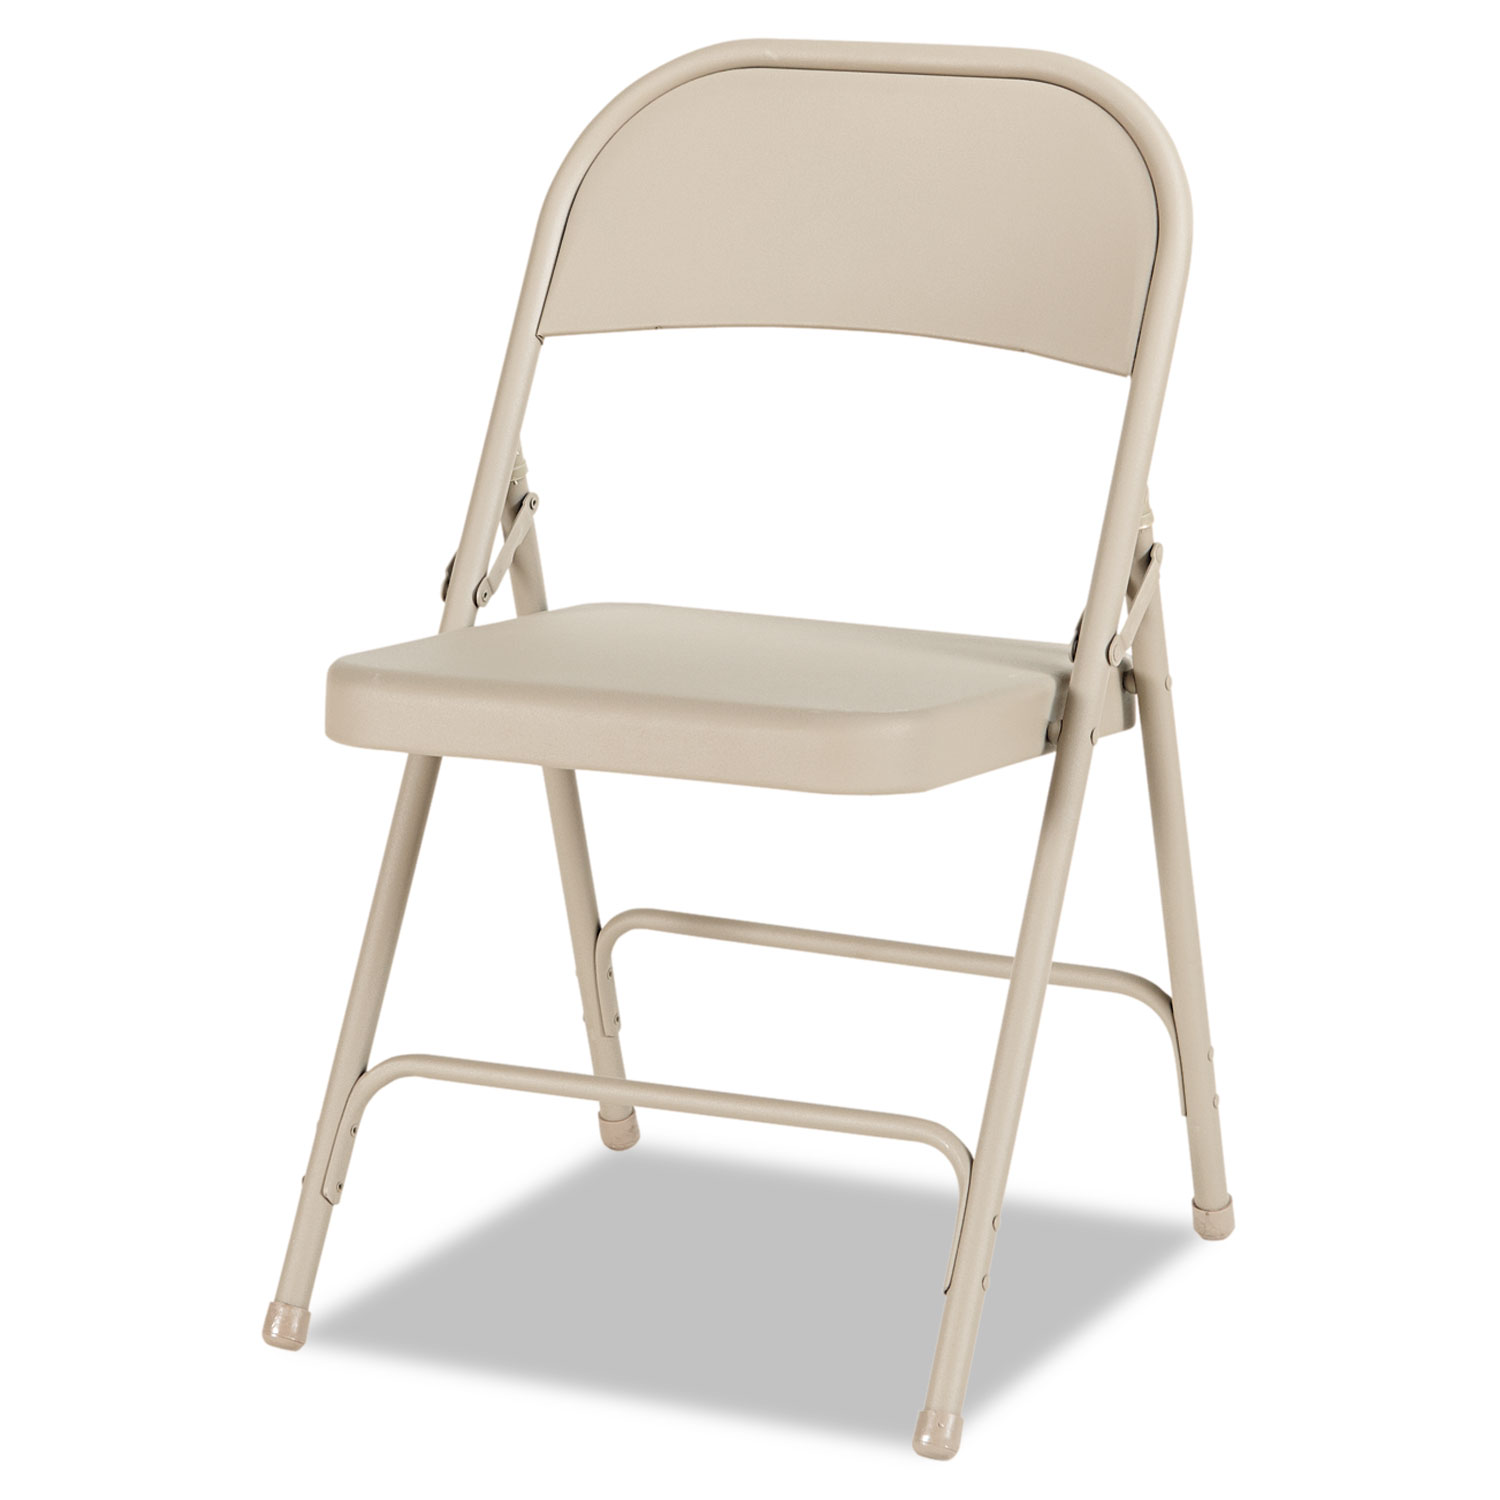 Steel Folding Chair with Two-Brace Support, Tan Seat/Tan Back, Tan Base, 4/Carton